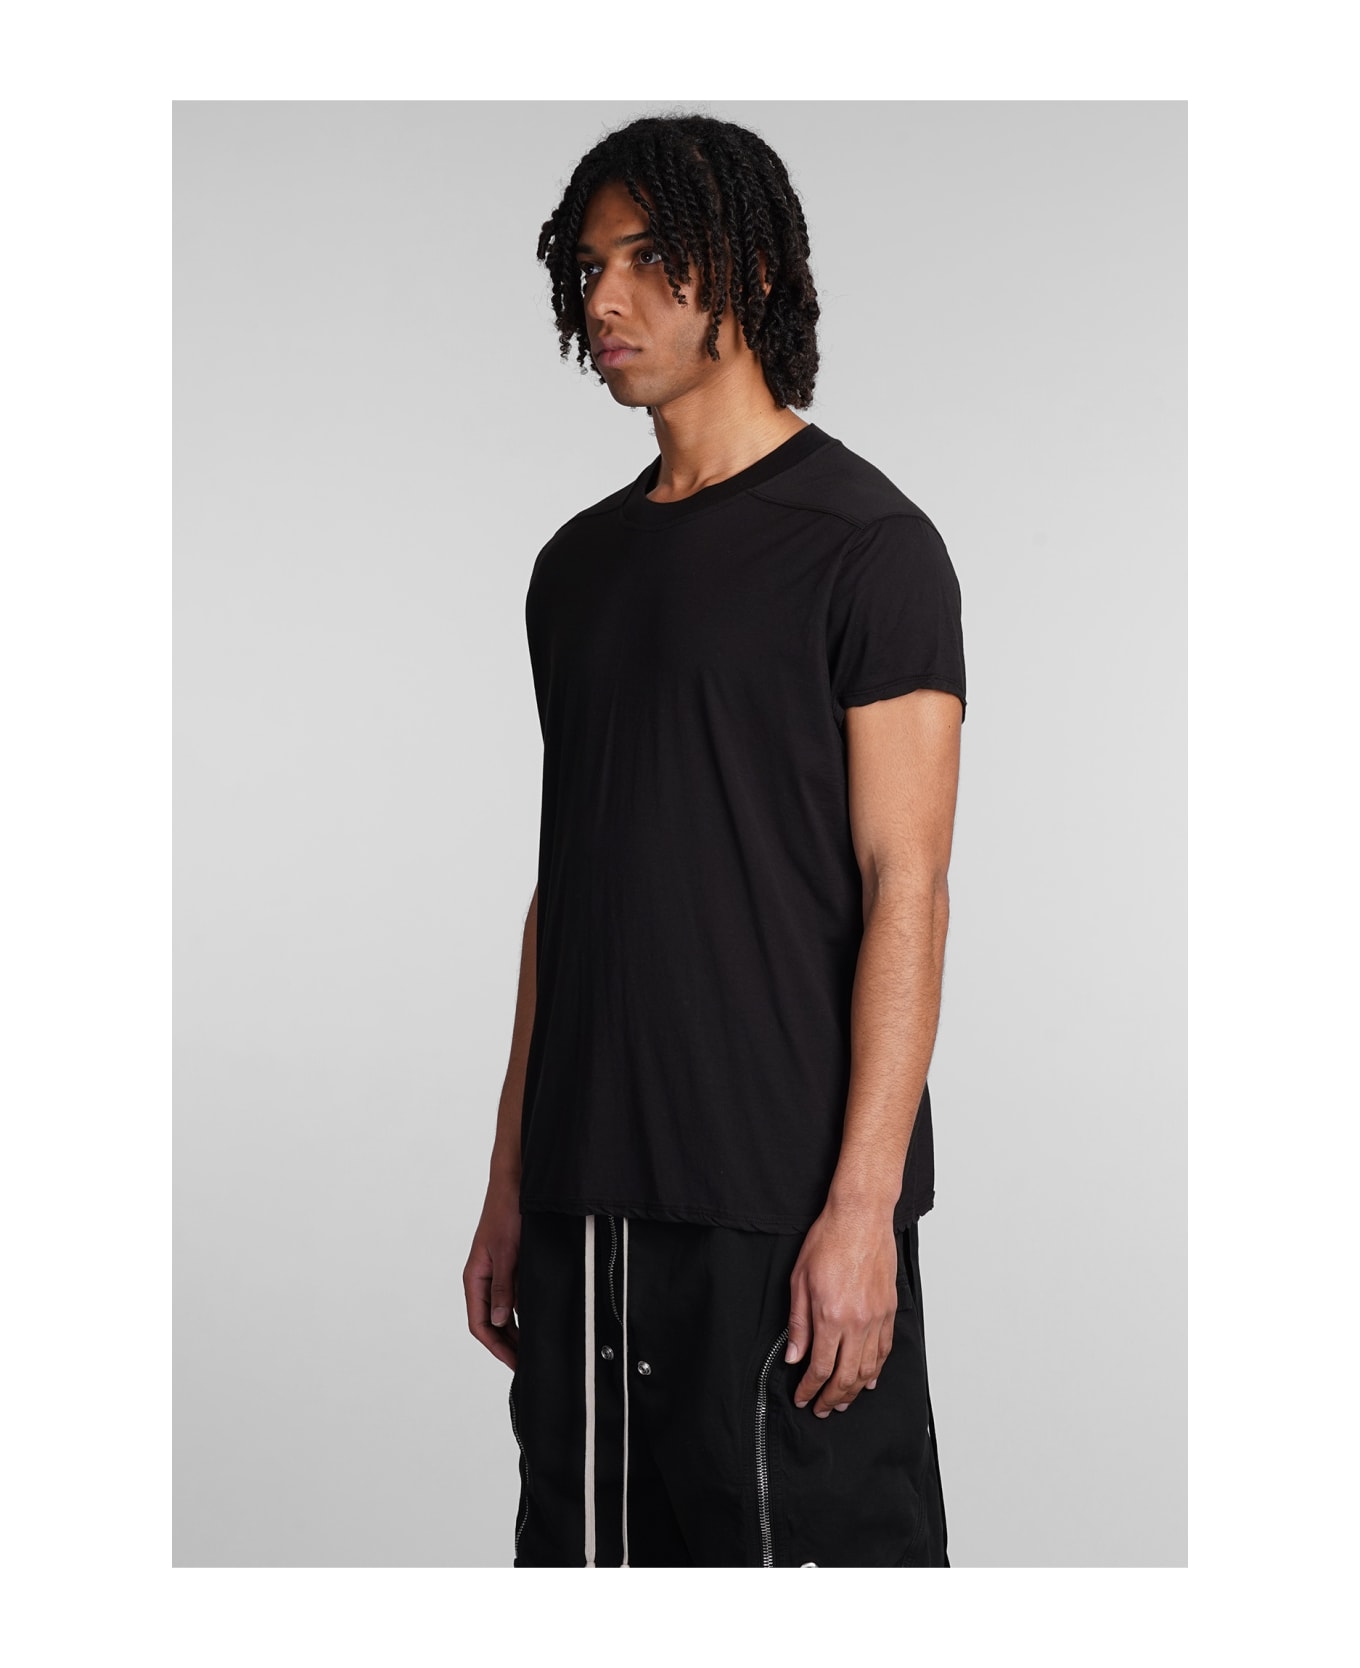 DRKSHDW Small Level T T-shirt In Black Cotton - Black